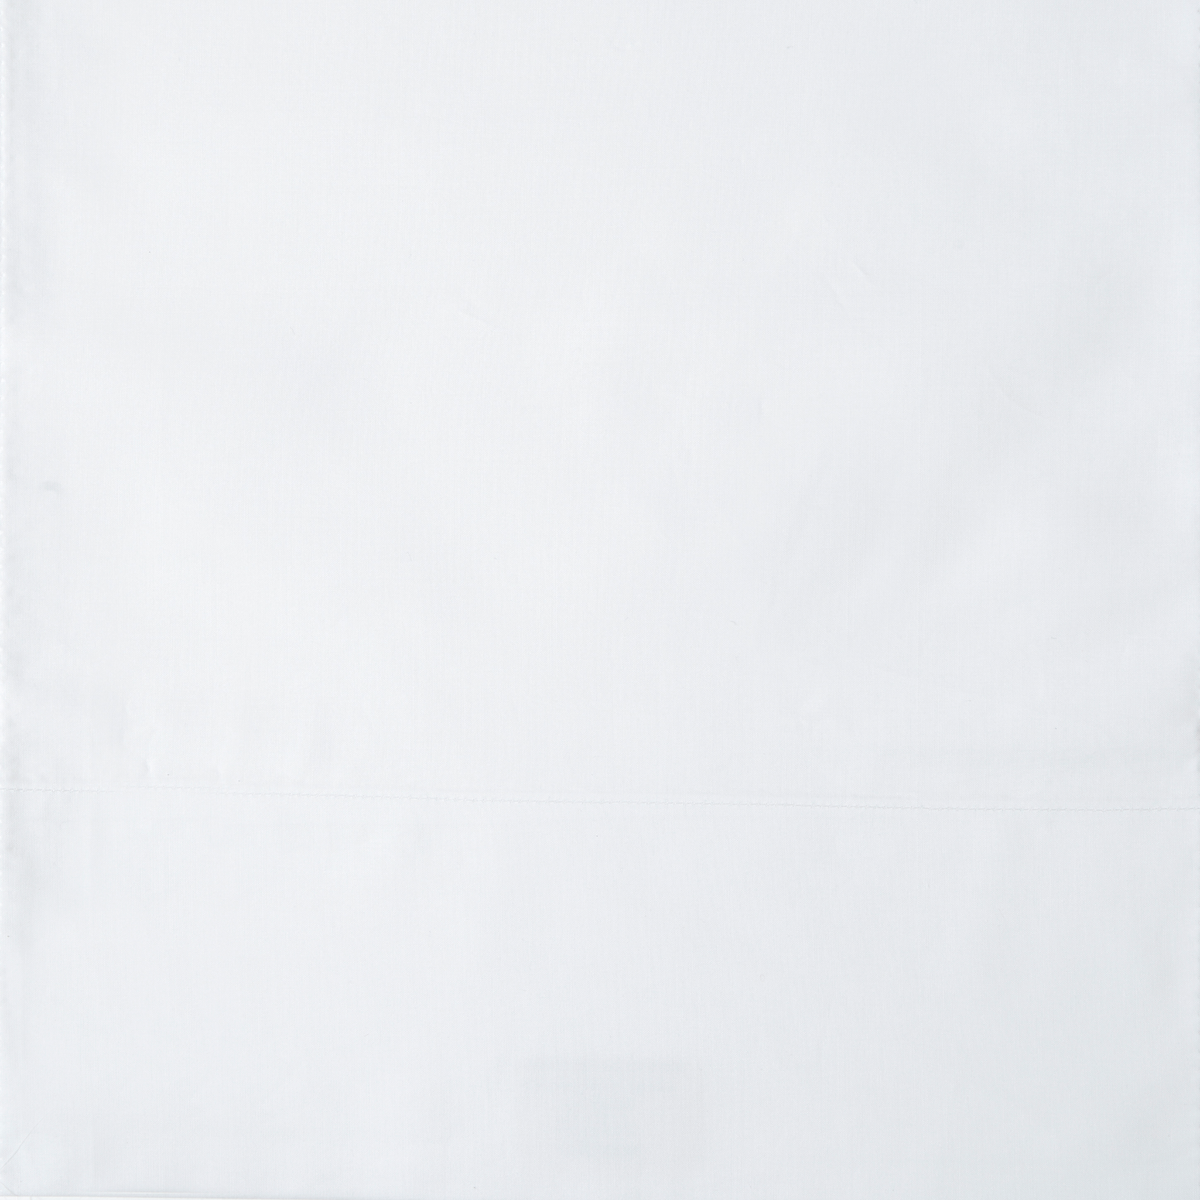 Swatch Sample of Signoria Gemma Bedding in White Color